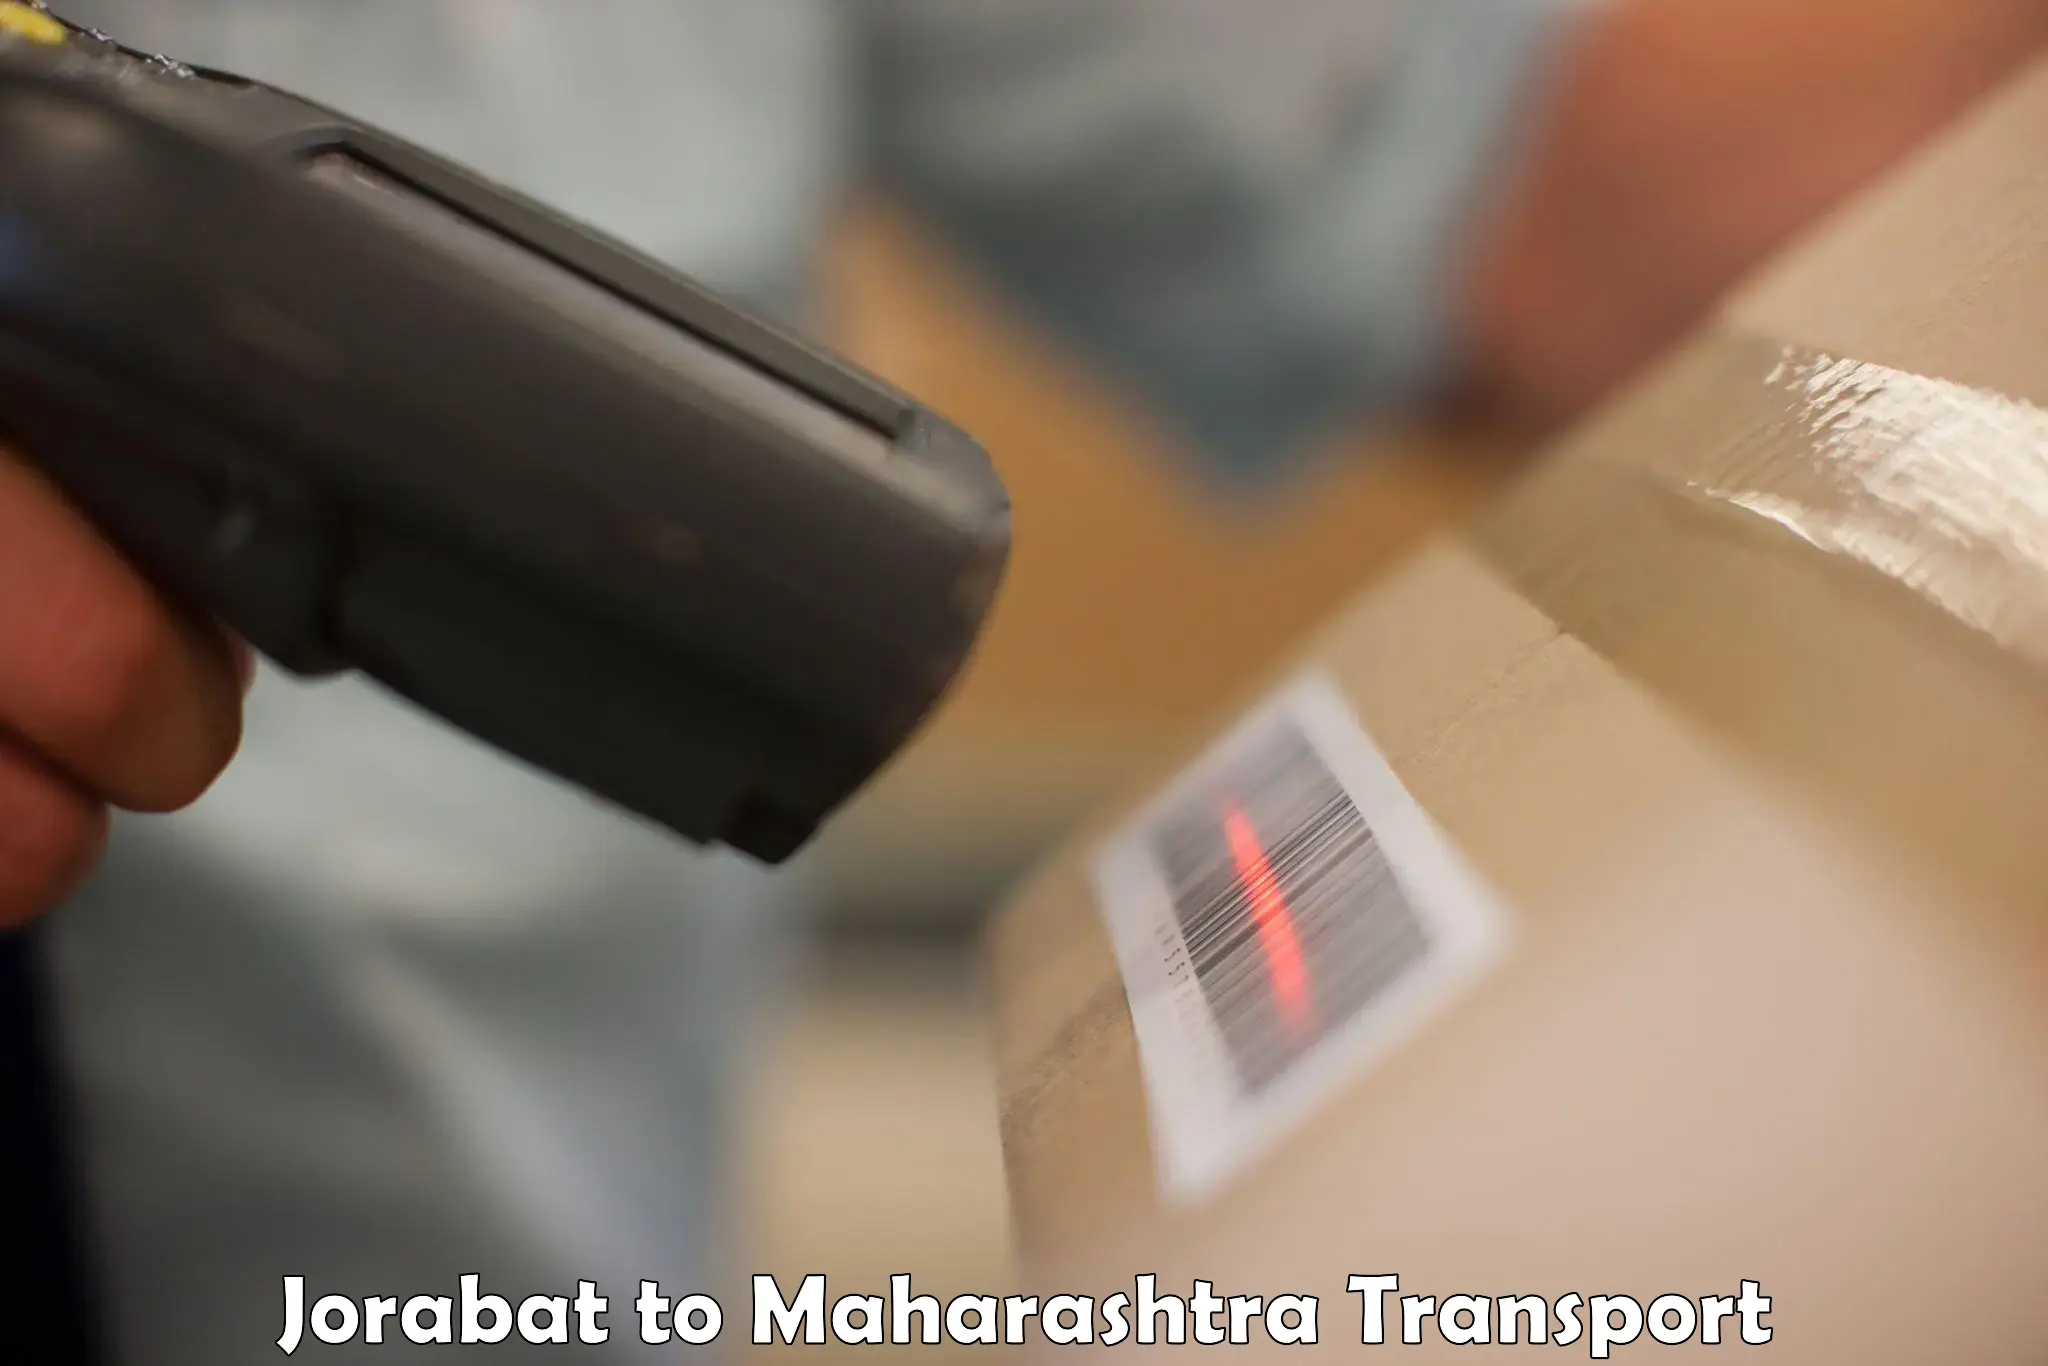 Delivery service Jorabat to Mumbai